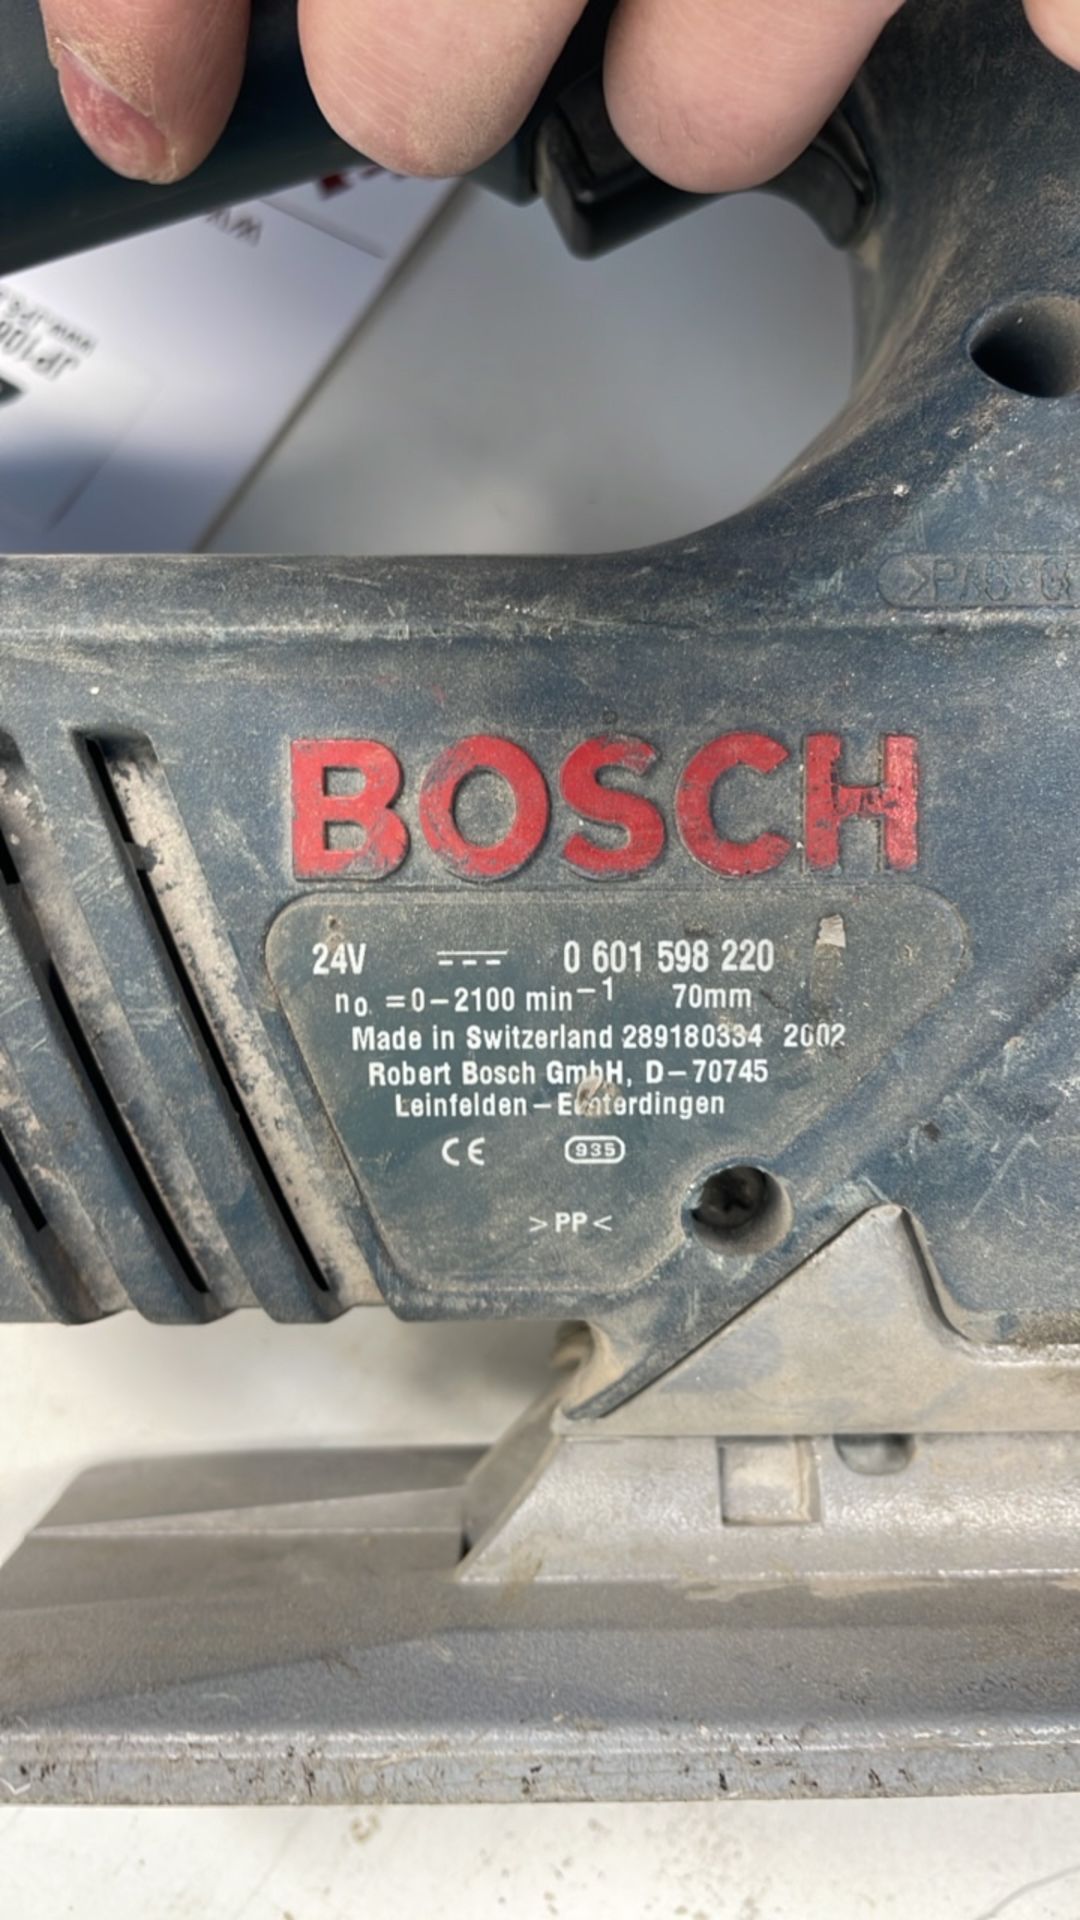 Bosch GST 24 V Cordless Jigsaw - Image 3 of 3